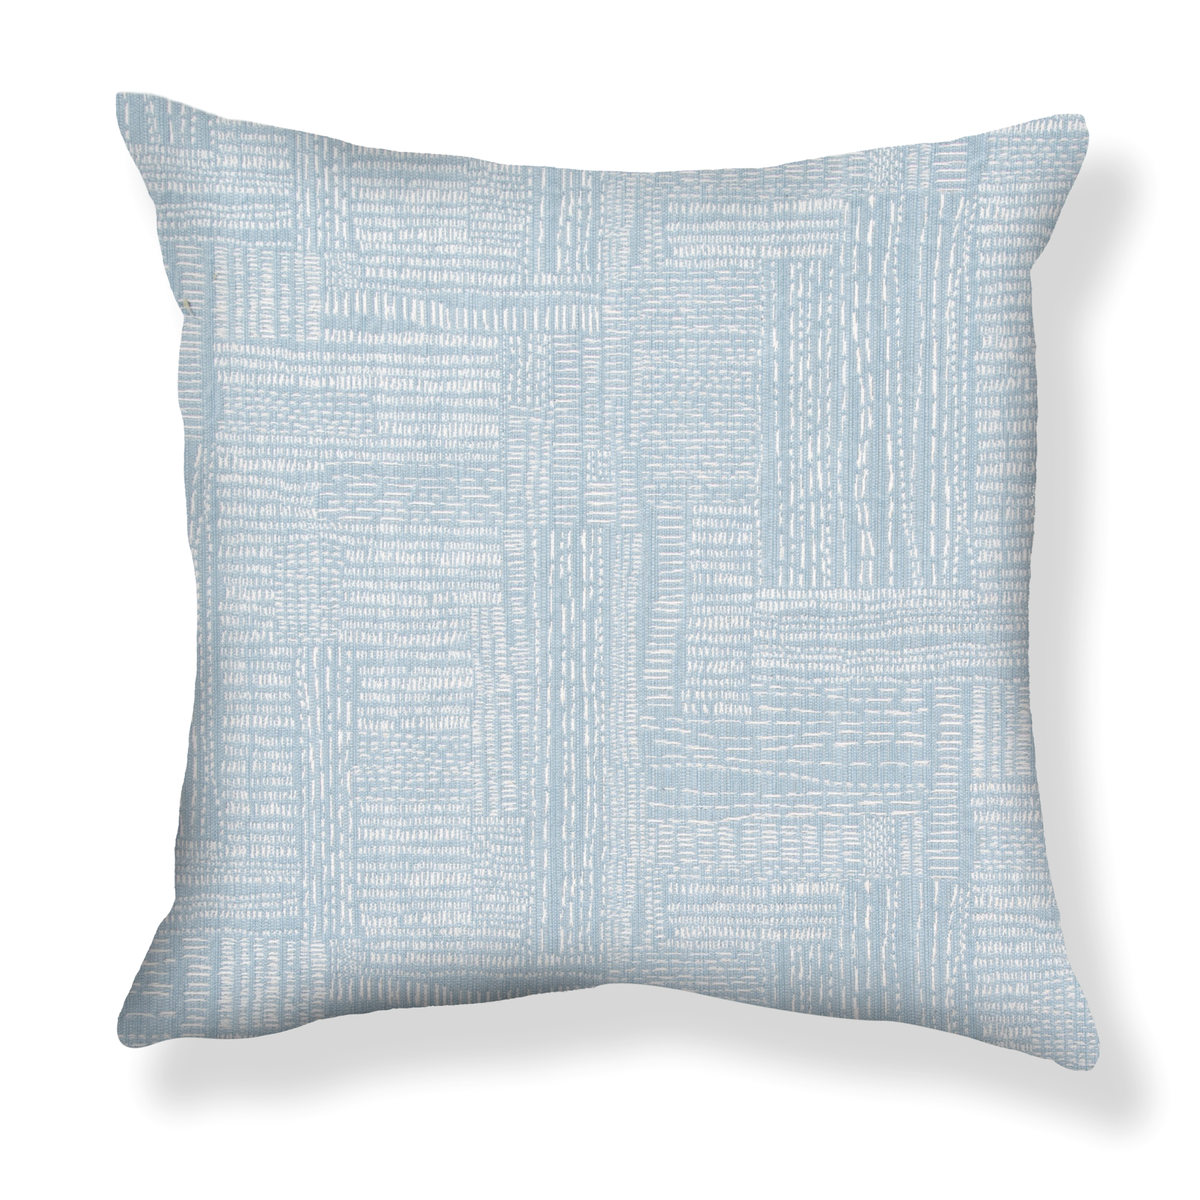 Sashiko Stitch Pillow in Pale Mist